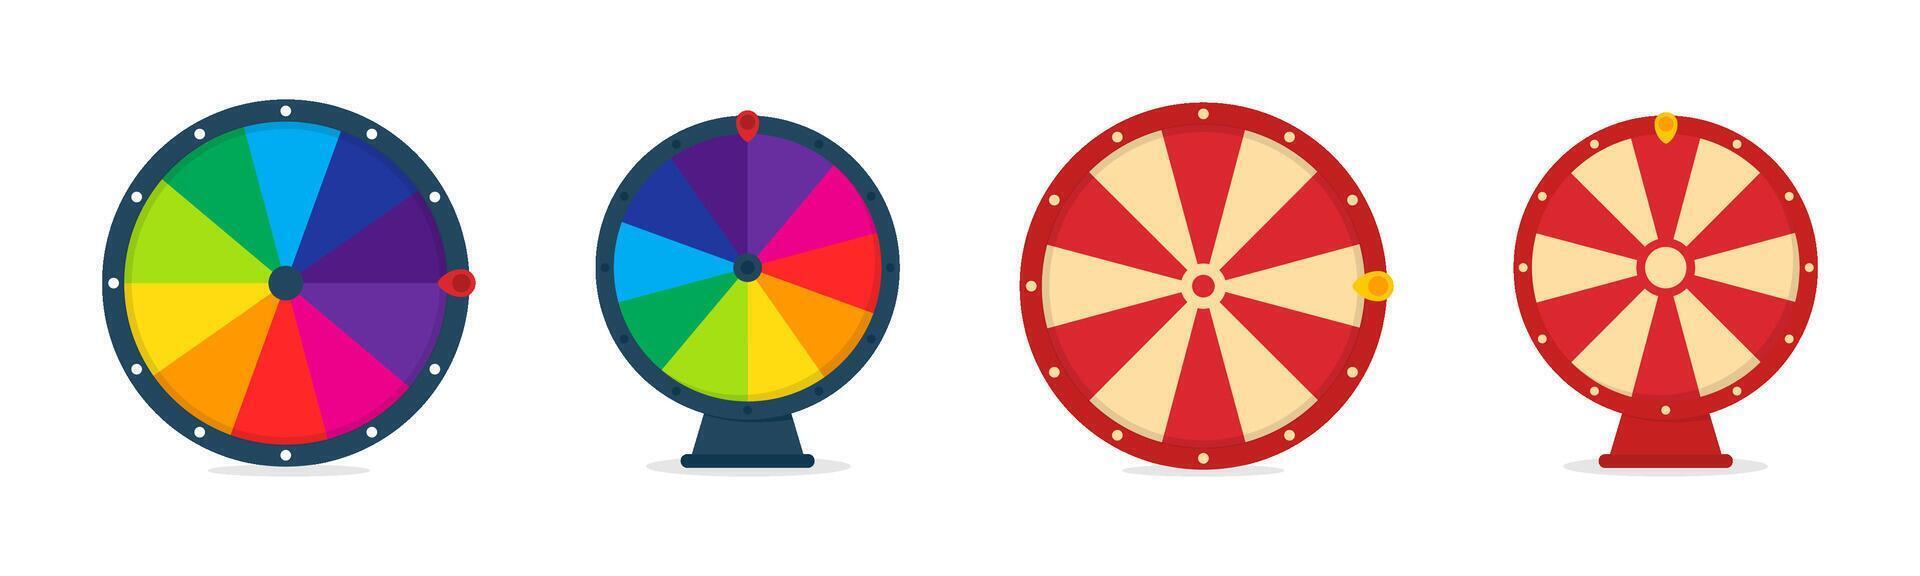 Wheel of fortune. Wheel of fortune illustration. Fortune wheel vector